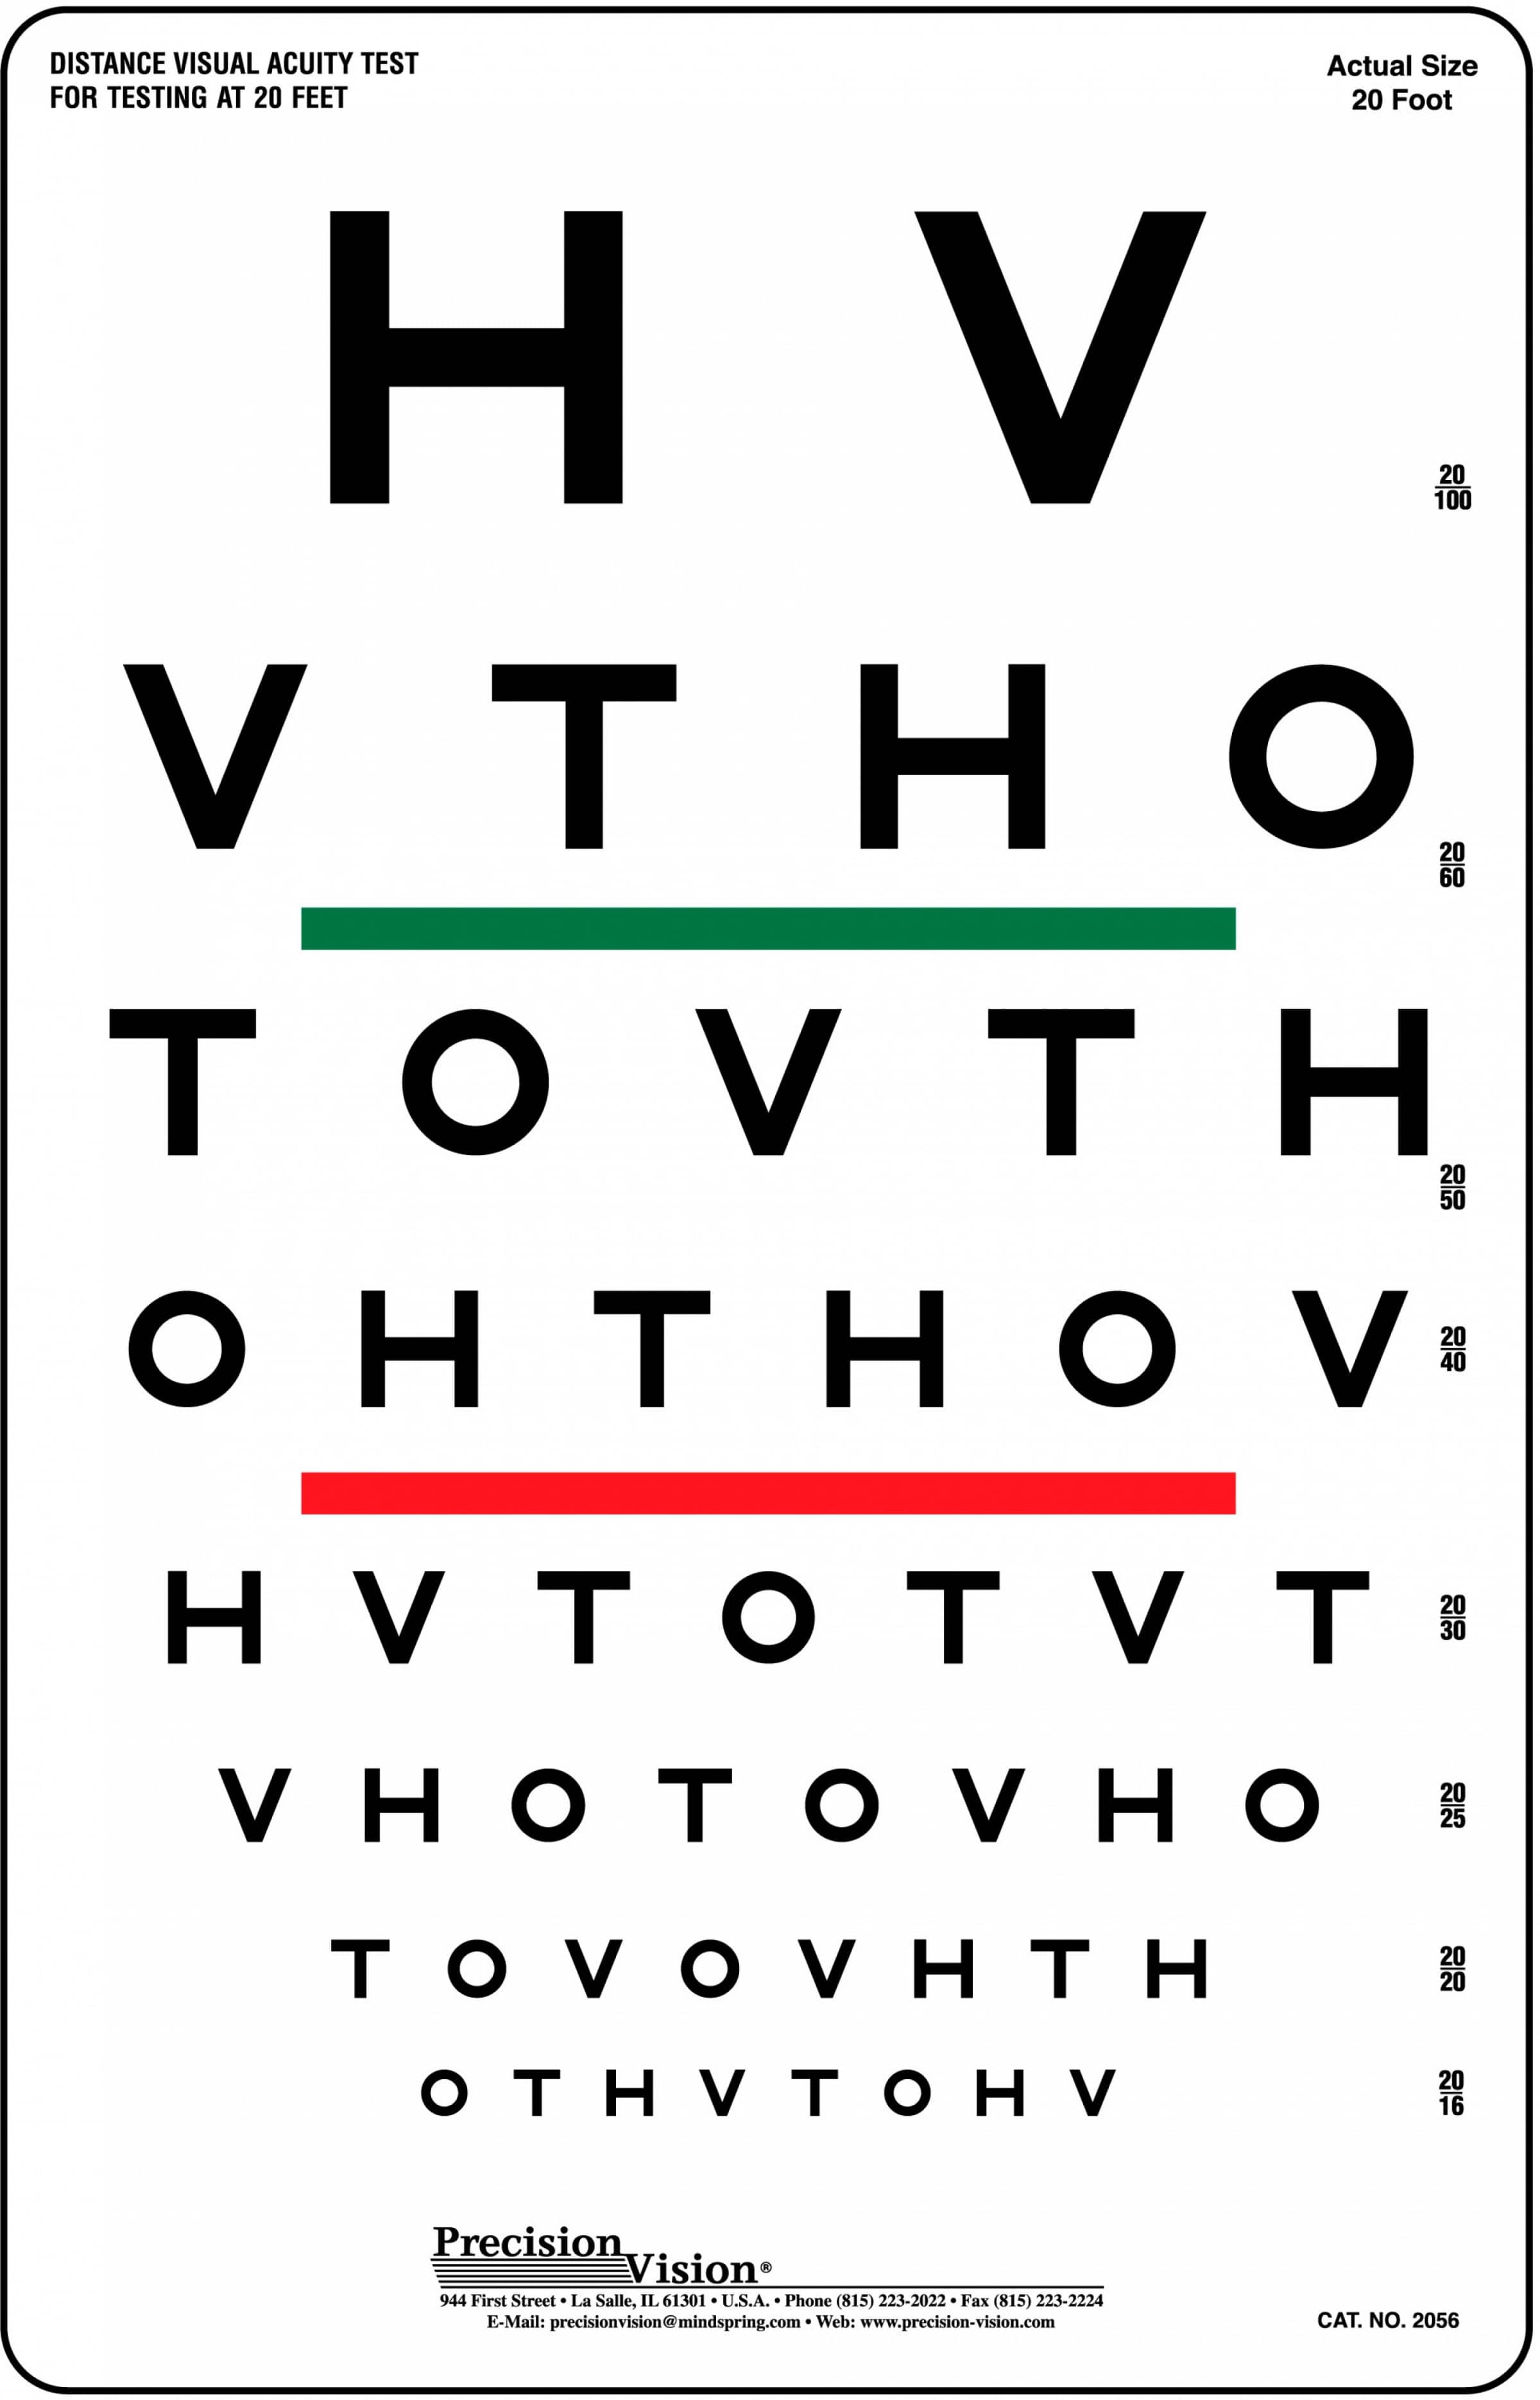 sloan-etdrs-format-near-vision-chart-3-precision-vision-snellen-near-chart-inkar-ainur